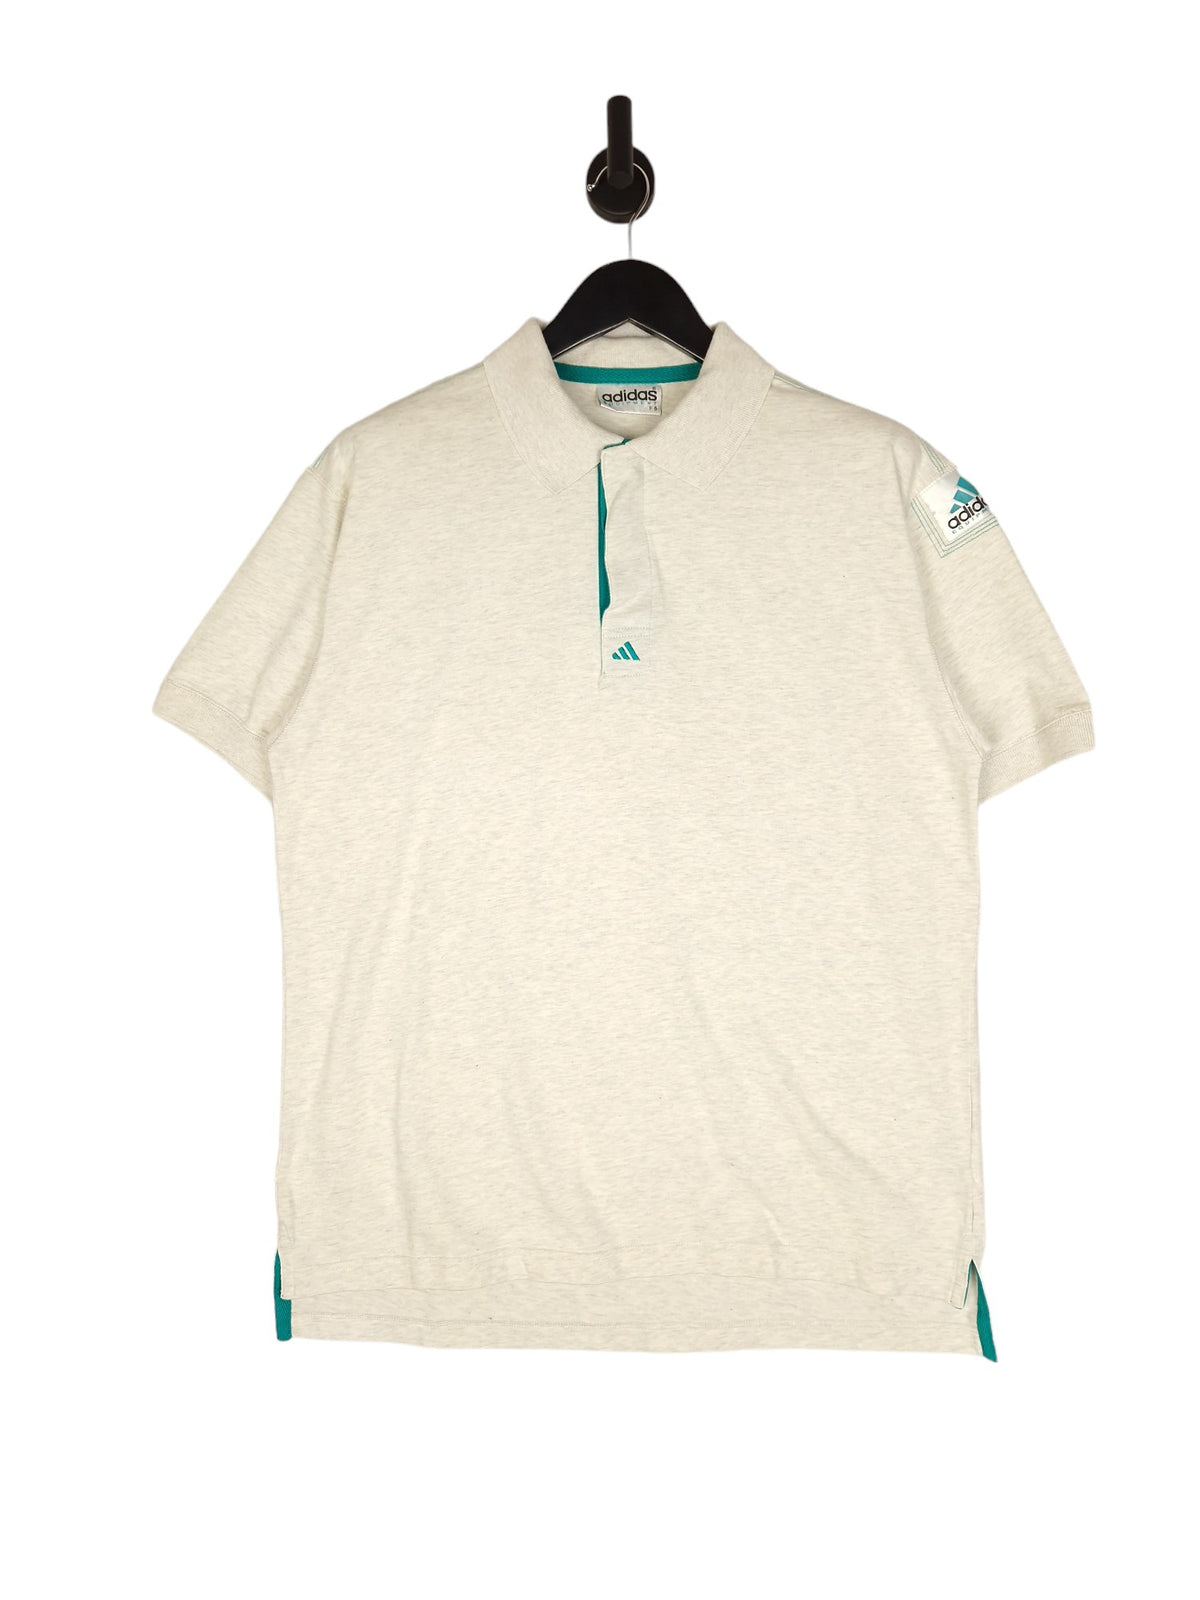 90's Adidas Equipment Polo Shirt - Size L/XL